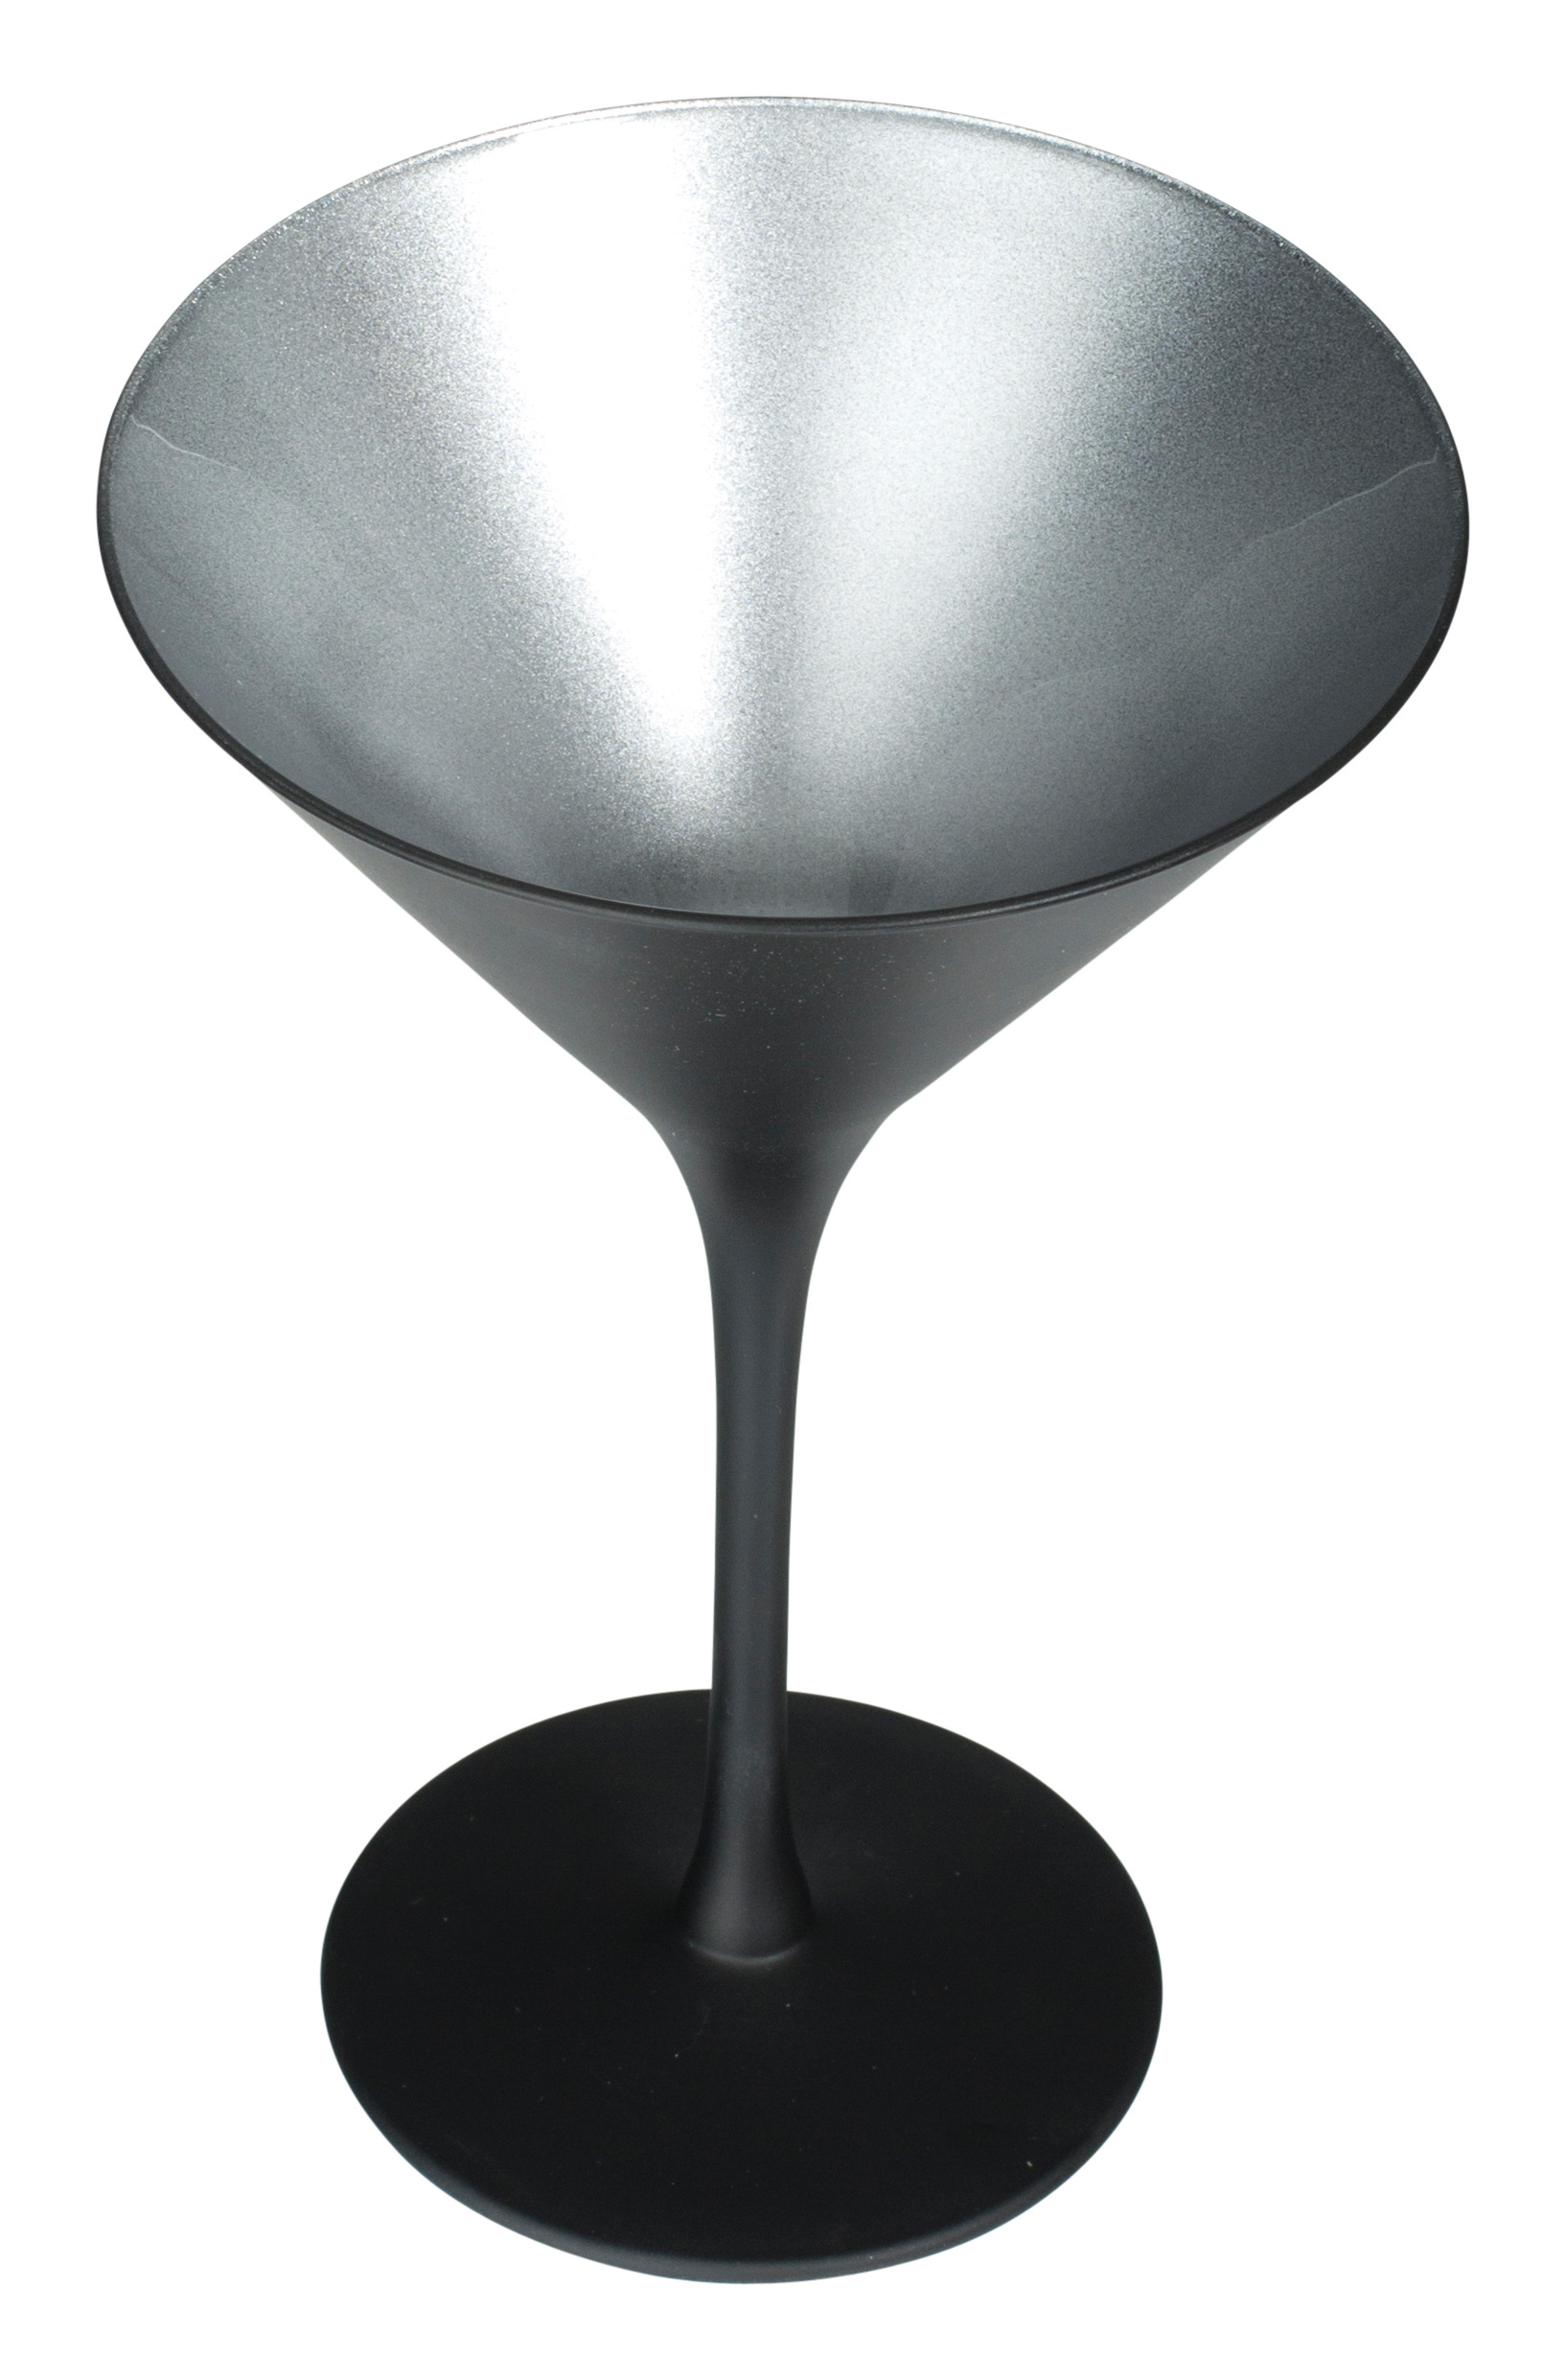 Martini glass, matt black/silver, Elements Stölzle - 240ml